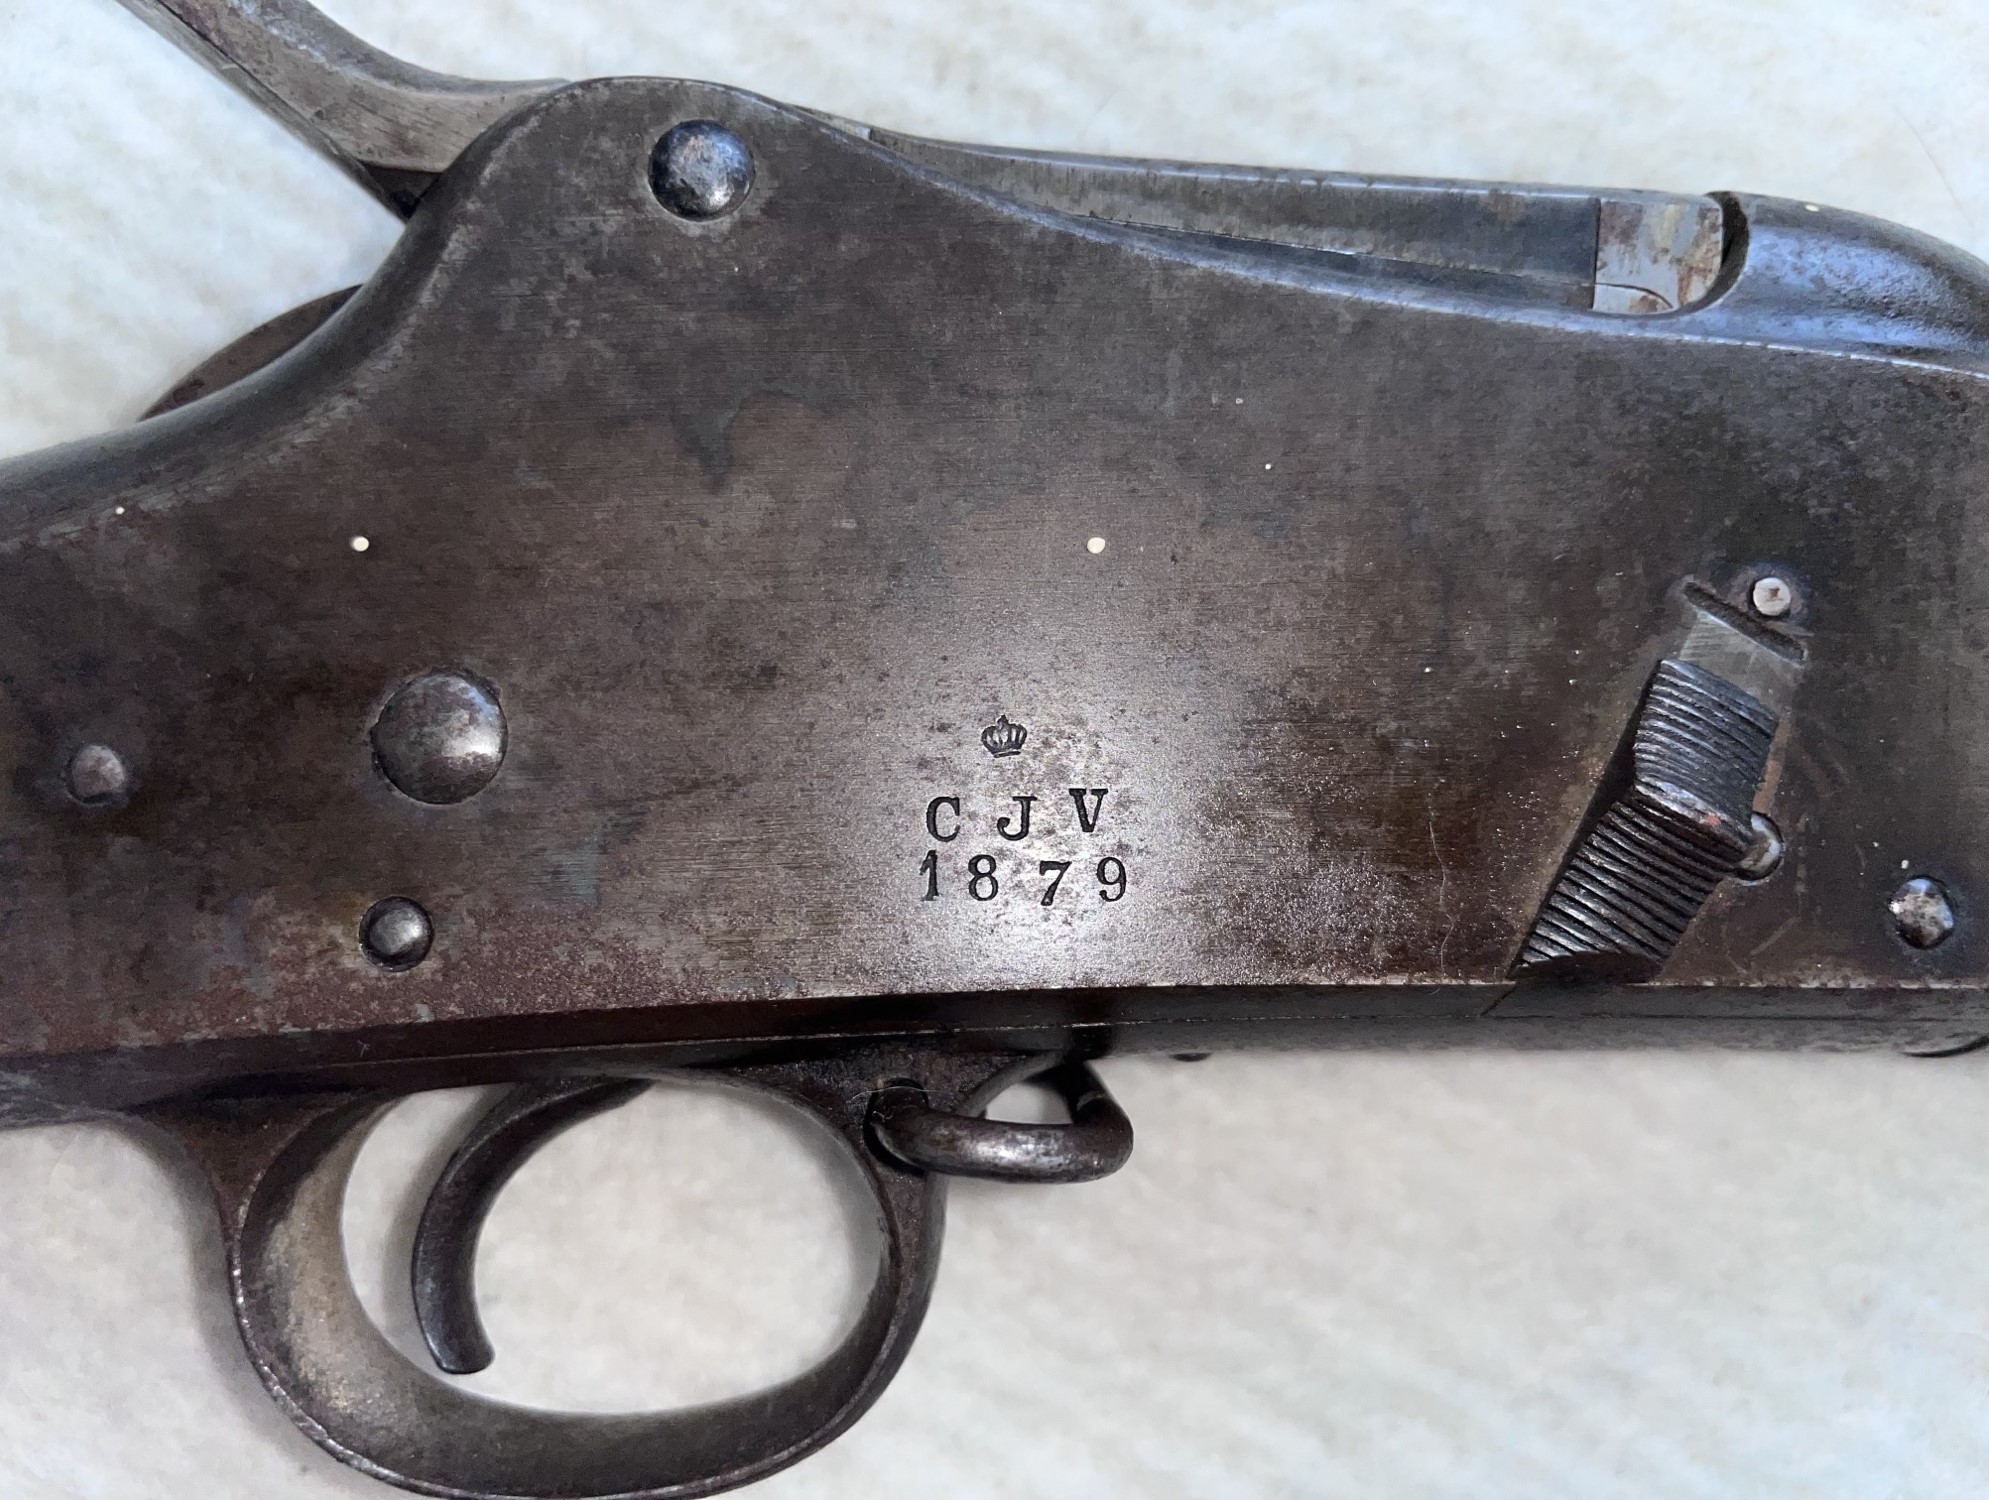 ./guns/rifle/bilder/Rifle-CJV-Krag-Petersson-M1876-1879-750-8.jpg